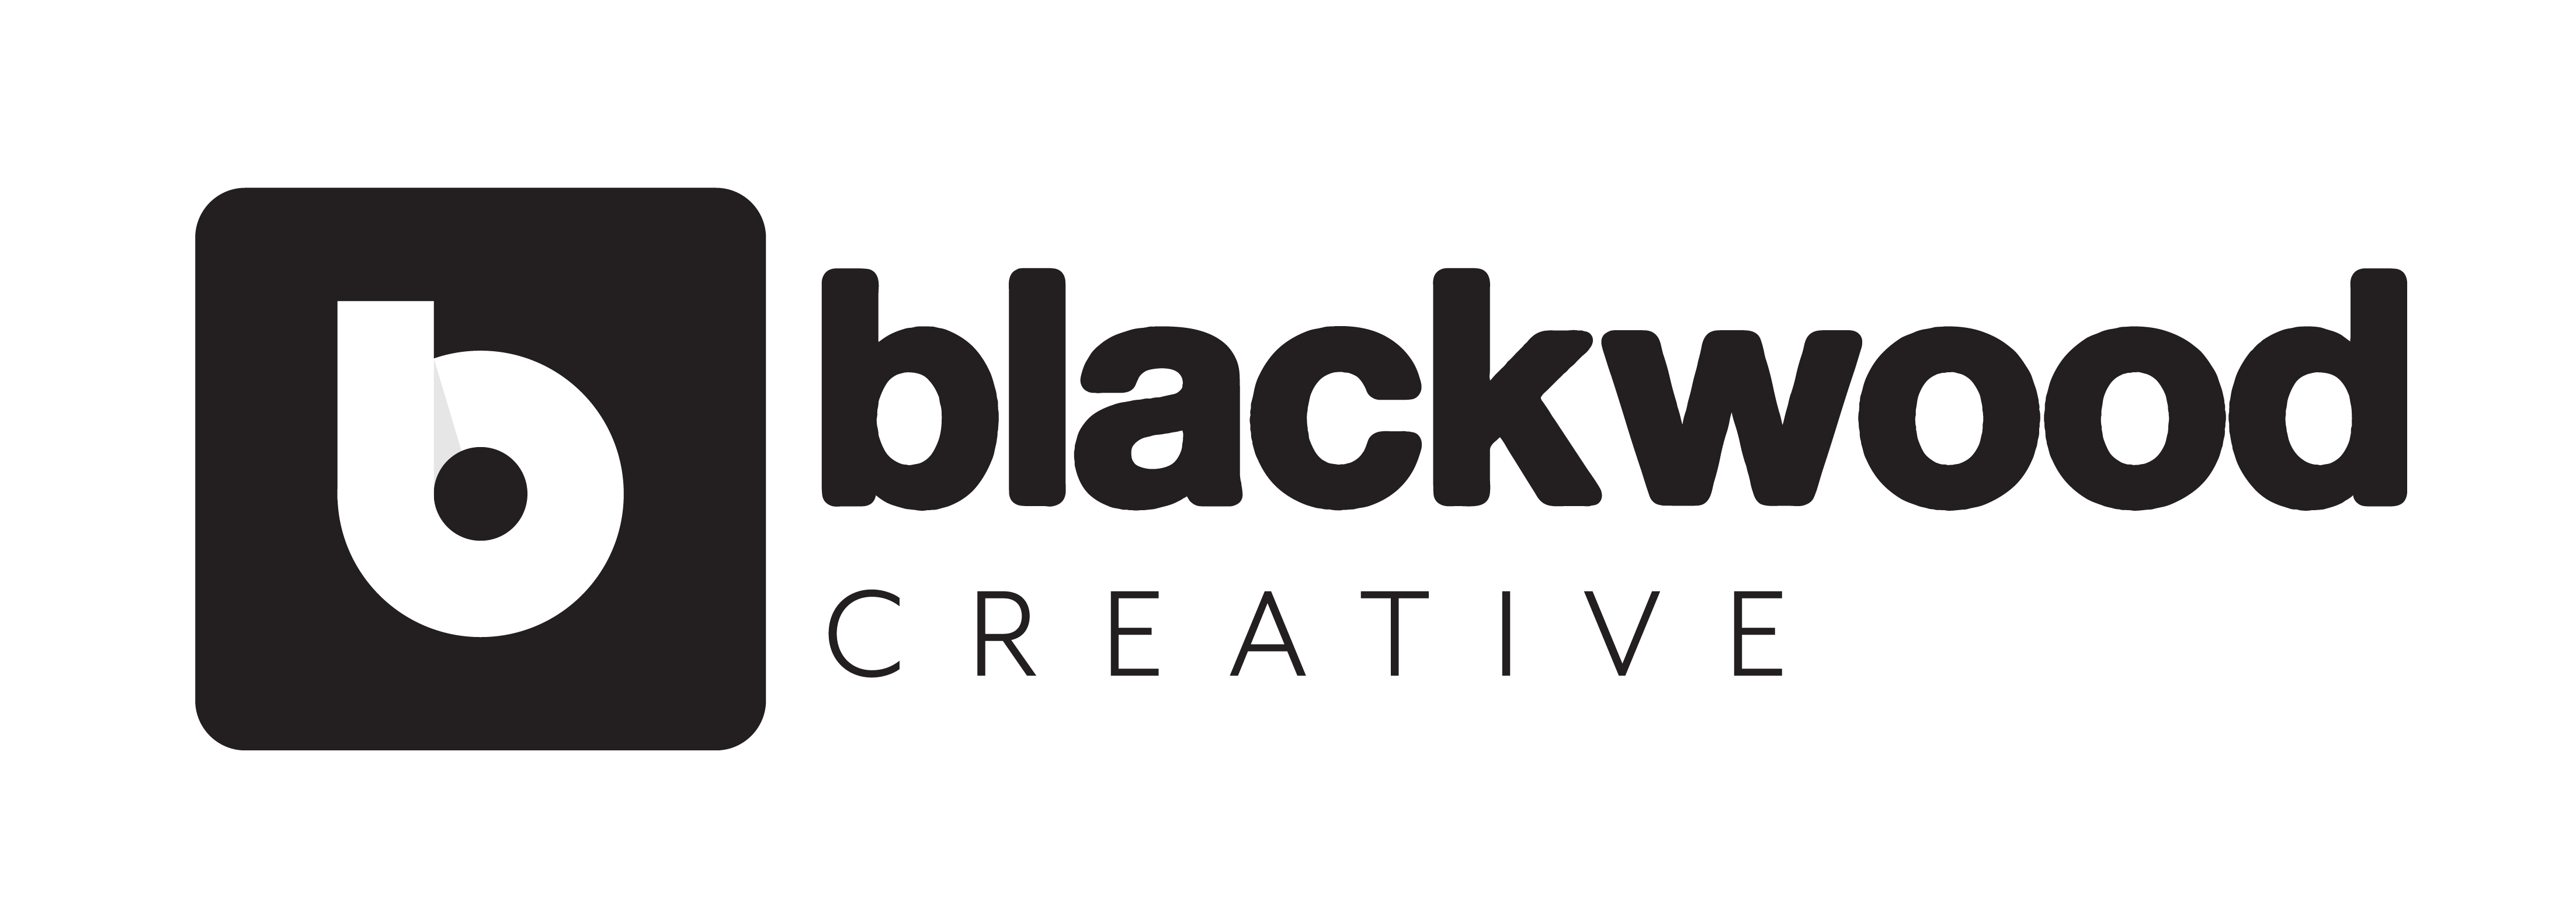 Blackwood Creative